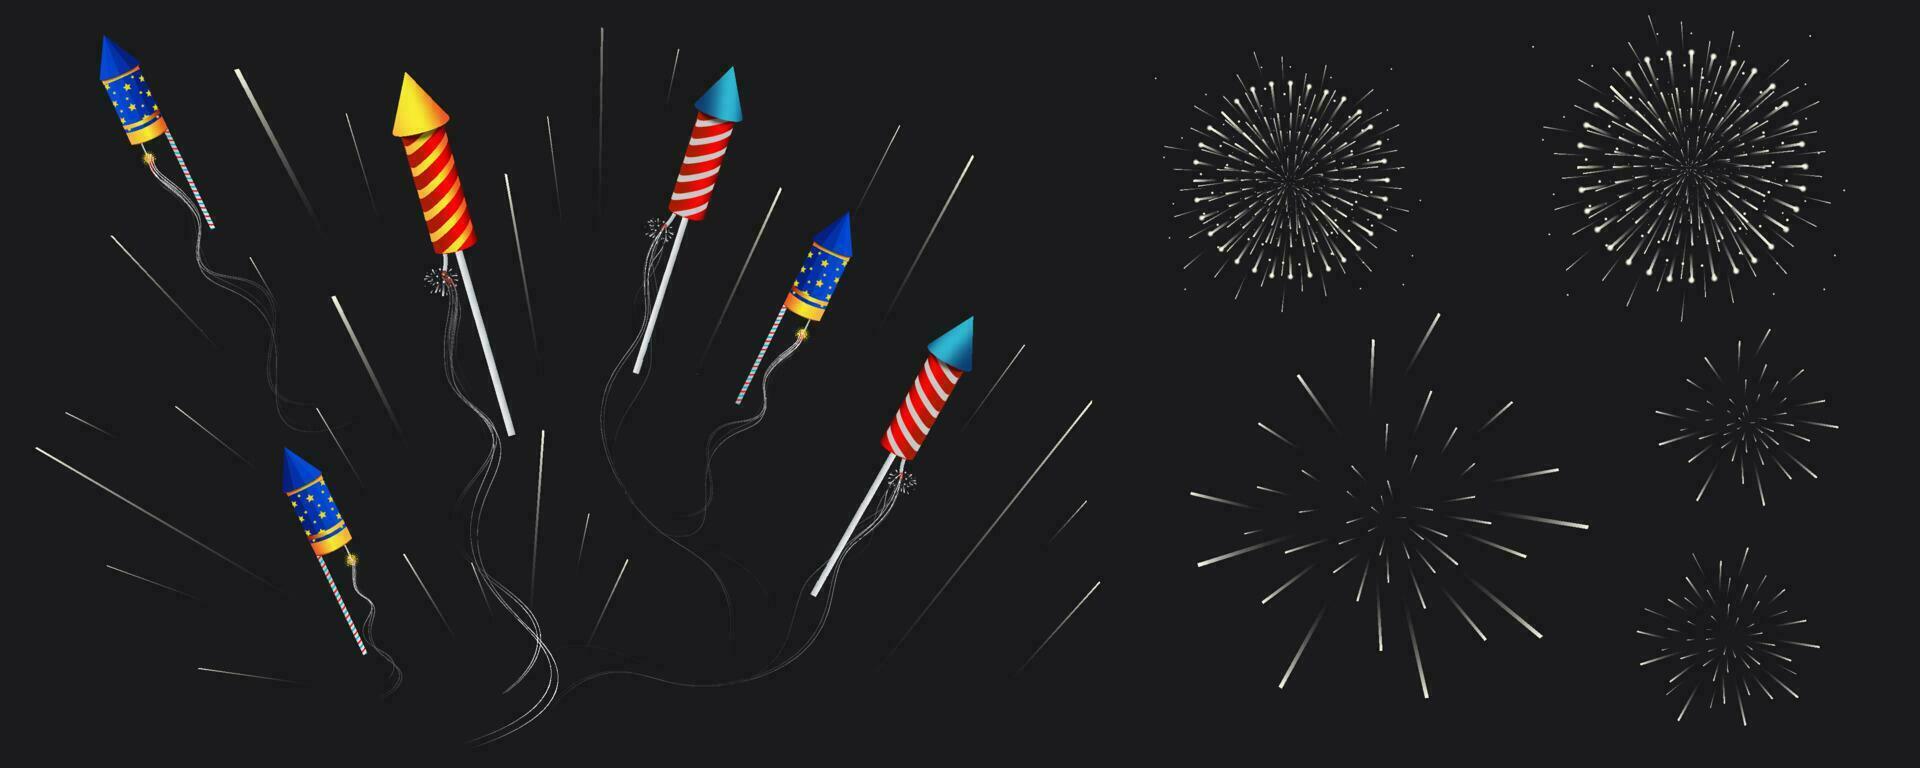 Fireworks set. Colorful firework composition images of fireworks dots in different patterns on black background. vector